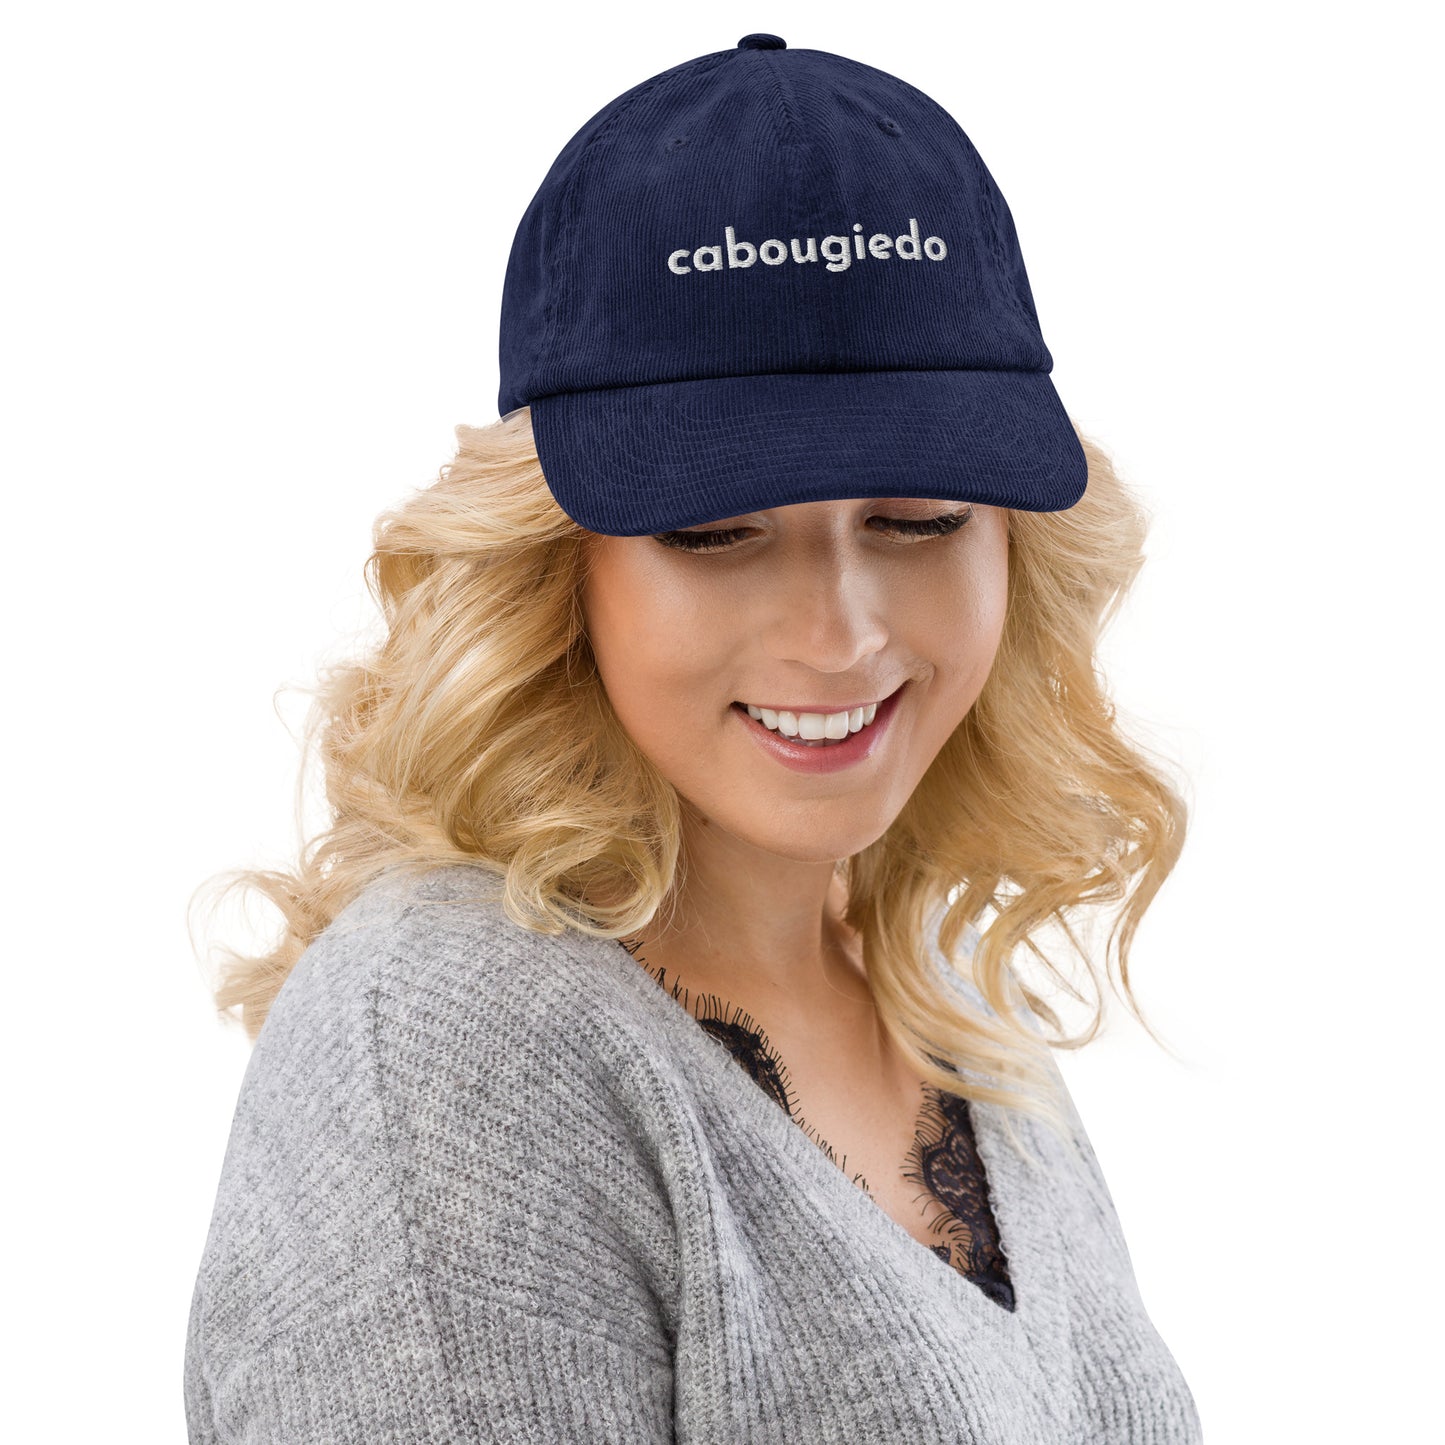 Corduroy hat - CaBougieDo